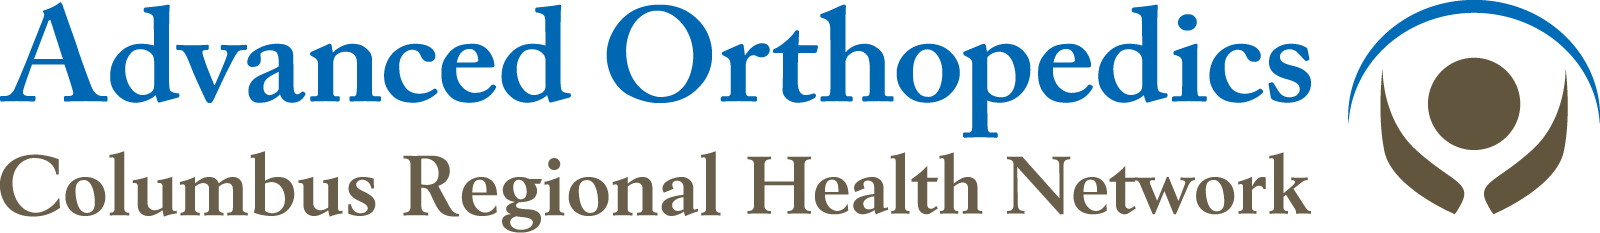 Advanced Orthopedics - Whiteville